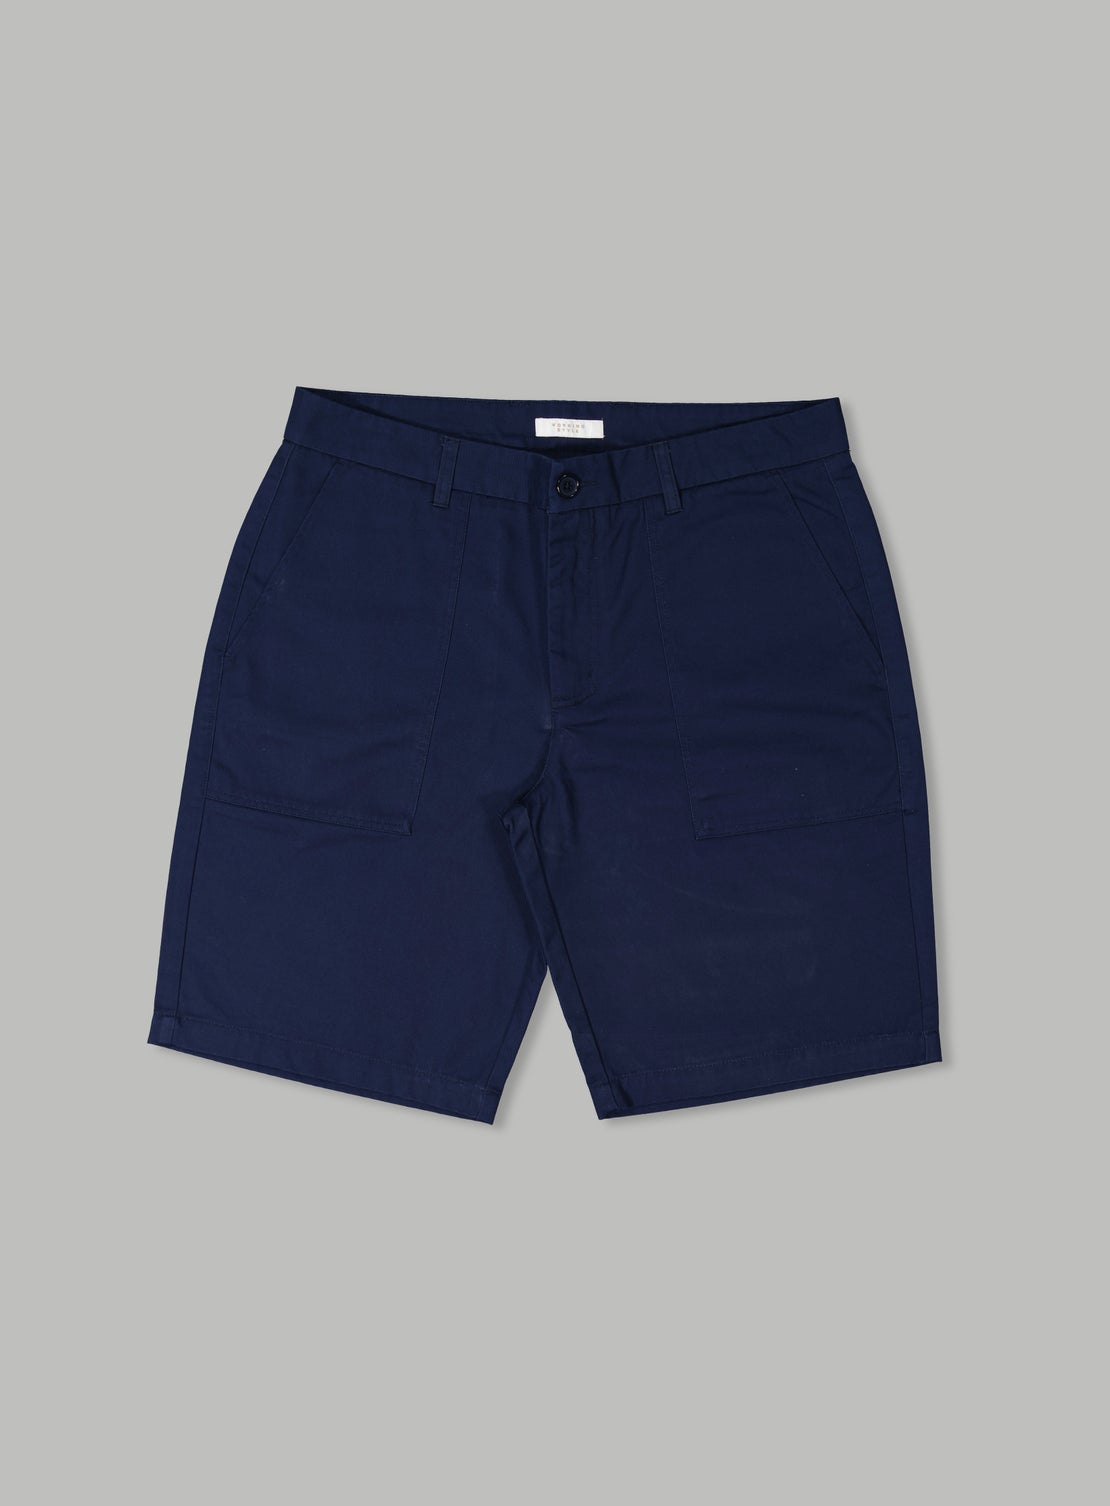 Navy Cotton Chino Shorts